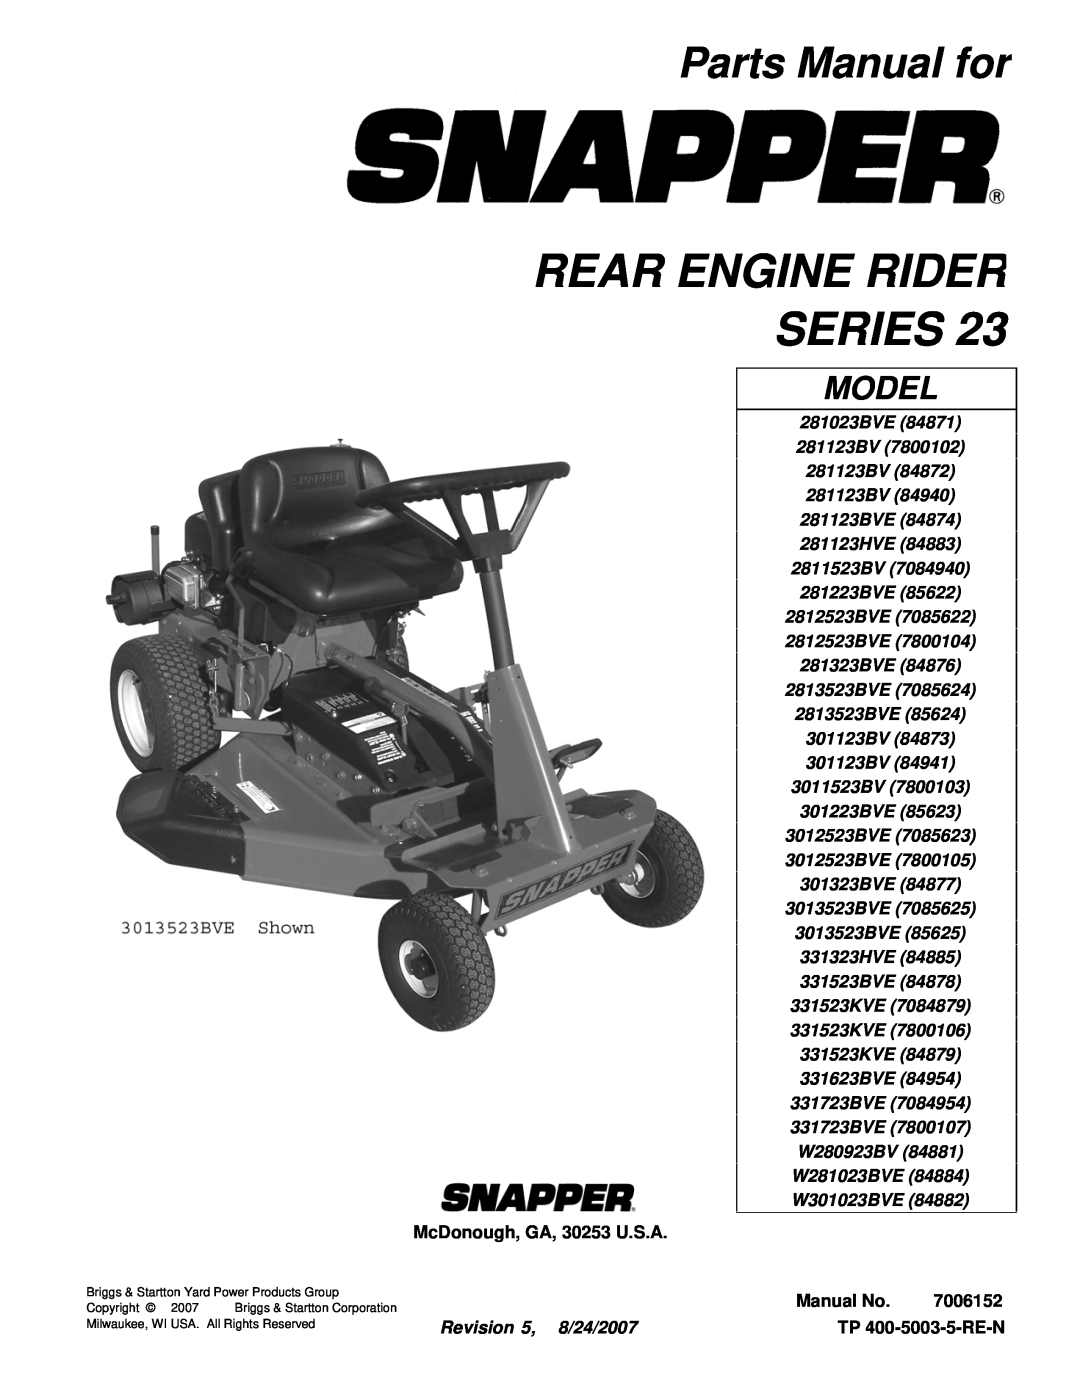 Snapper 281123HVE (84883) manual Parts Manual for, Rear Engine Rider Series, Model, McDonough, GA, 30253 U.S.A, Manual No 